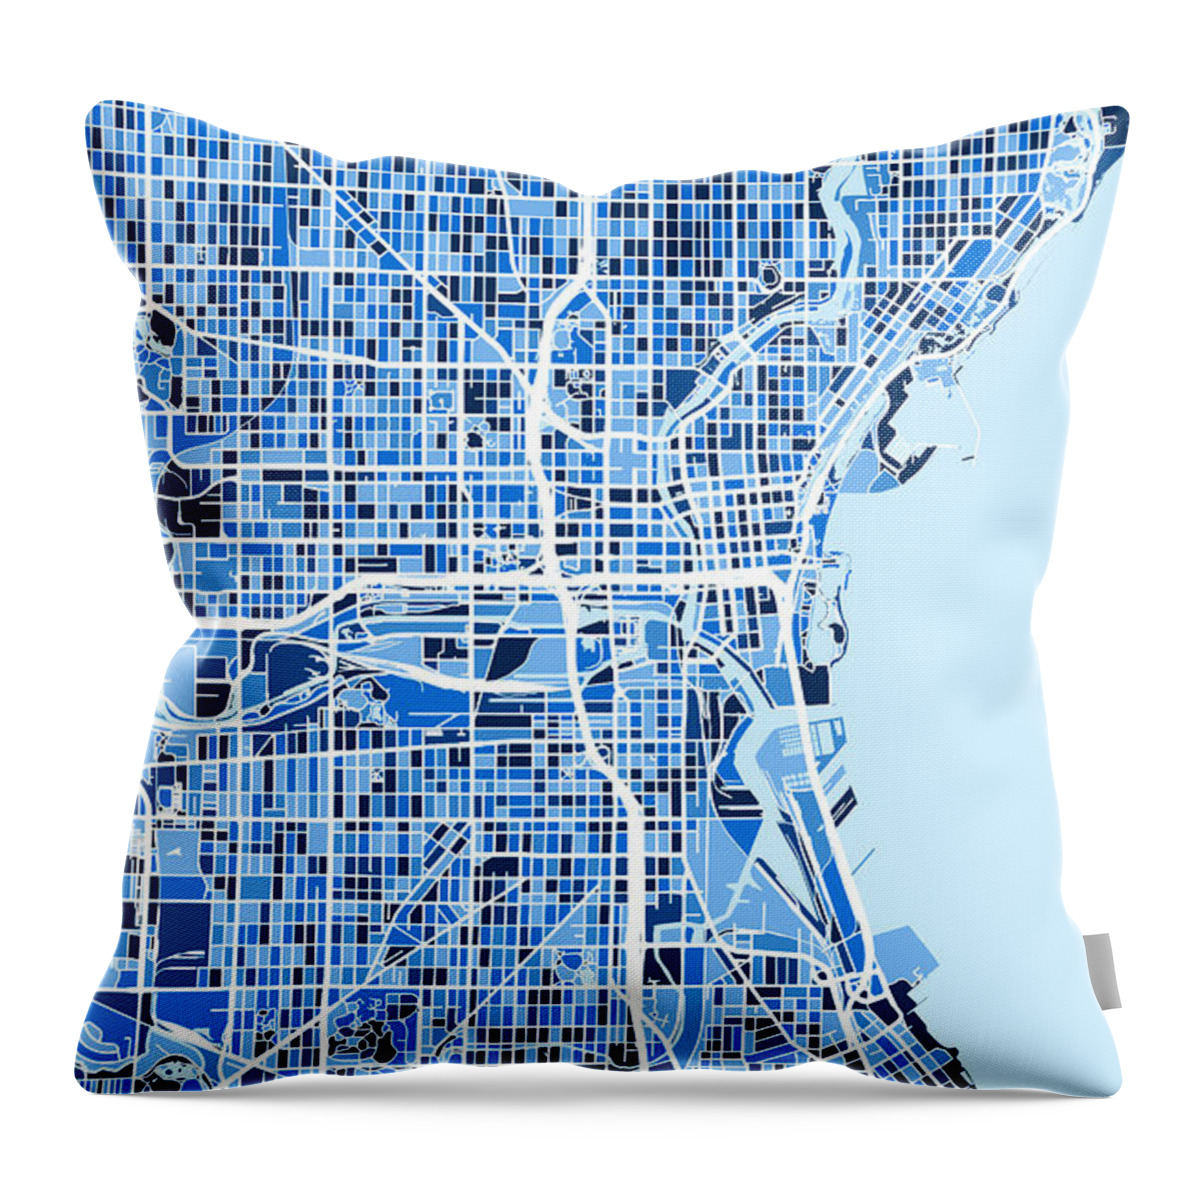 Milwaukee Throw Pillow featuring the digital art Milwaukee Wisconsin City Map by Michael Tompsett